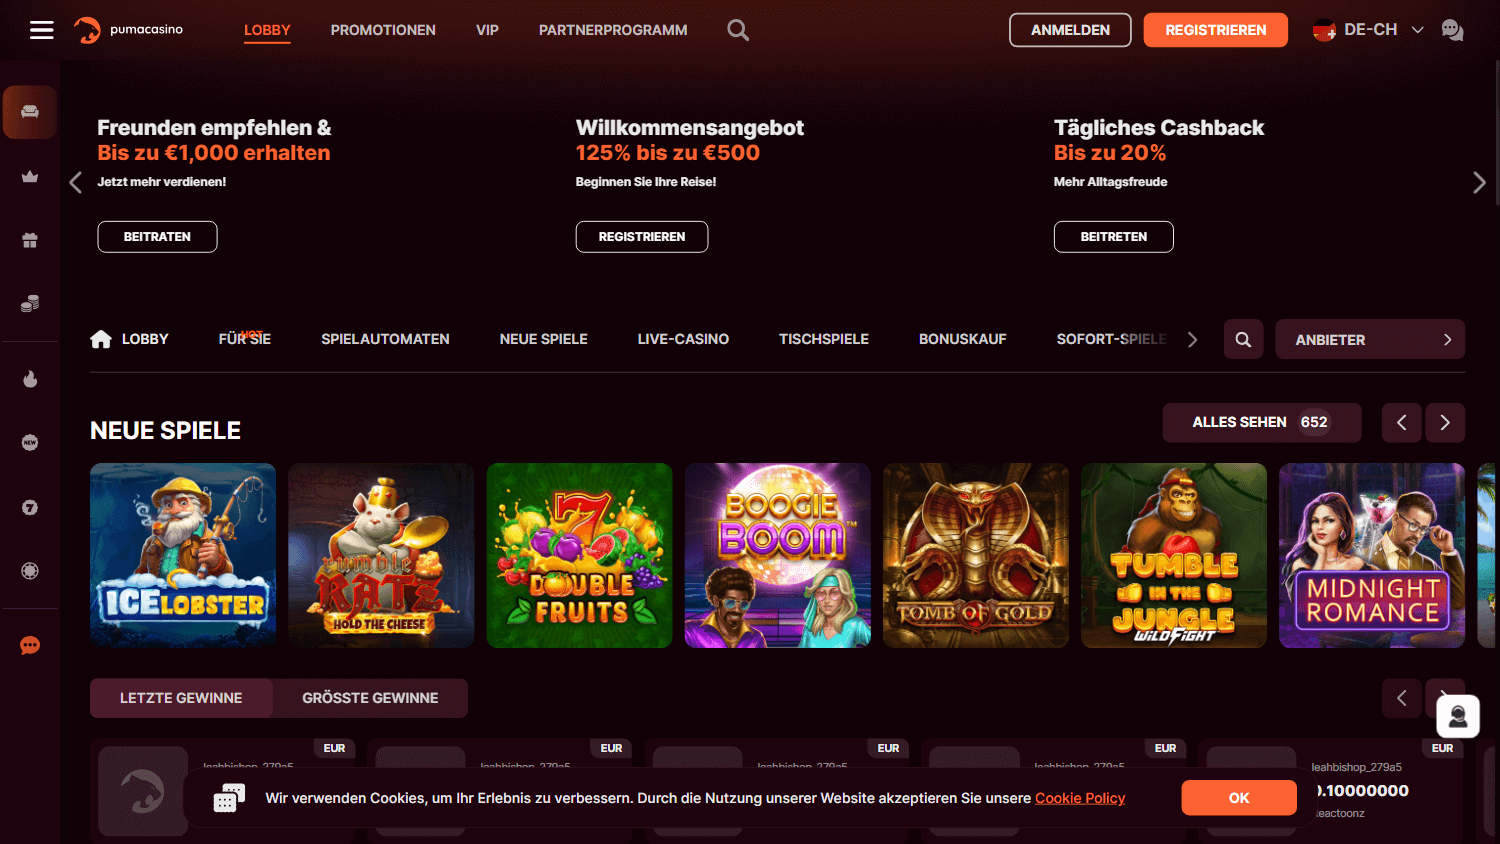 puma_casino_homepage_desktop